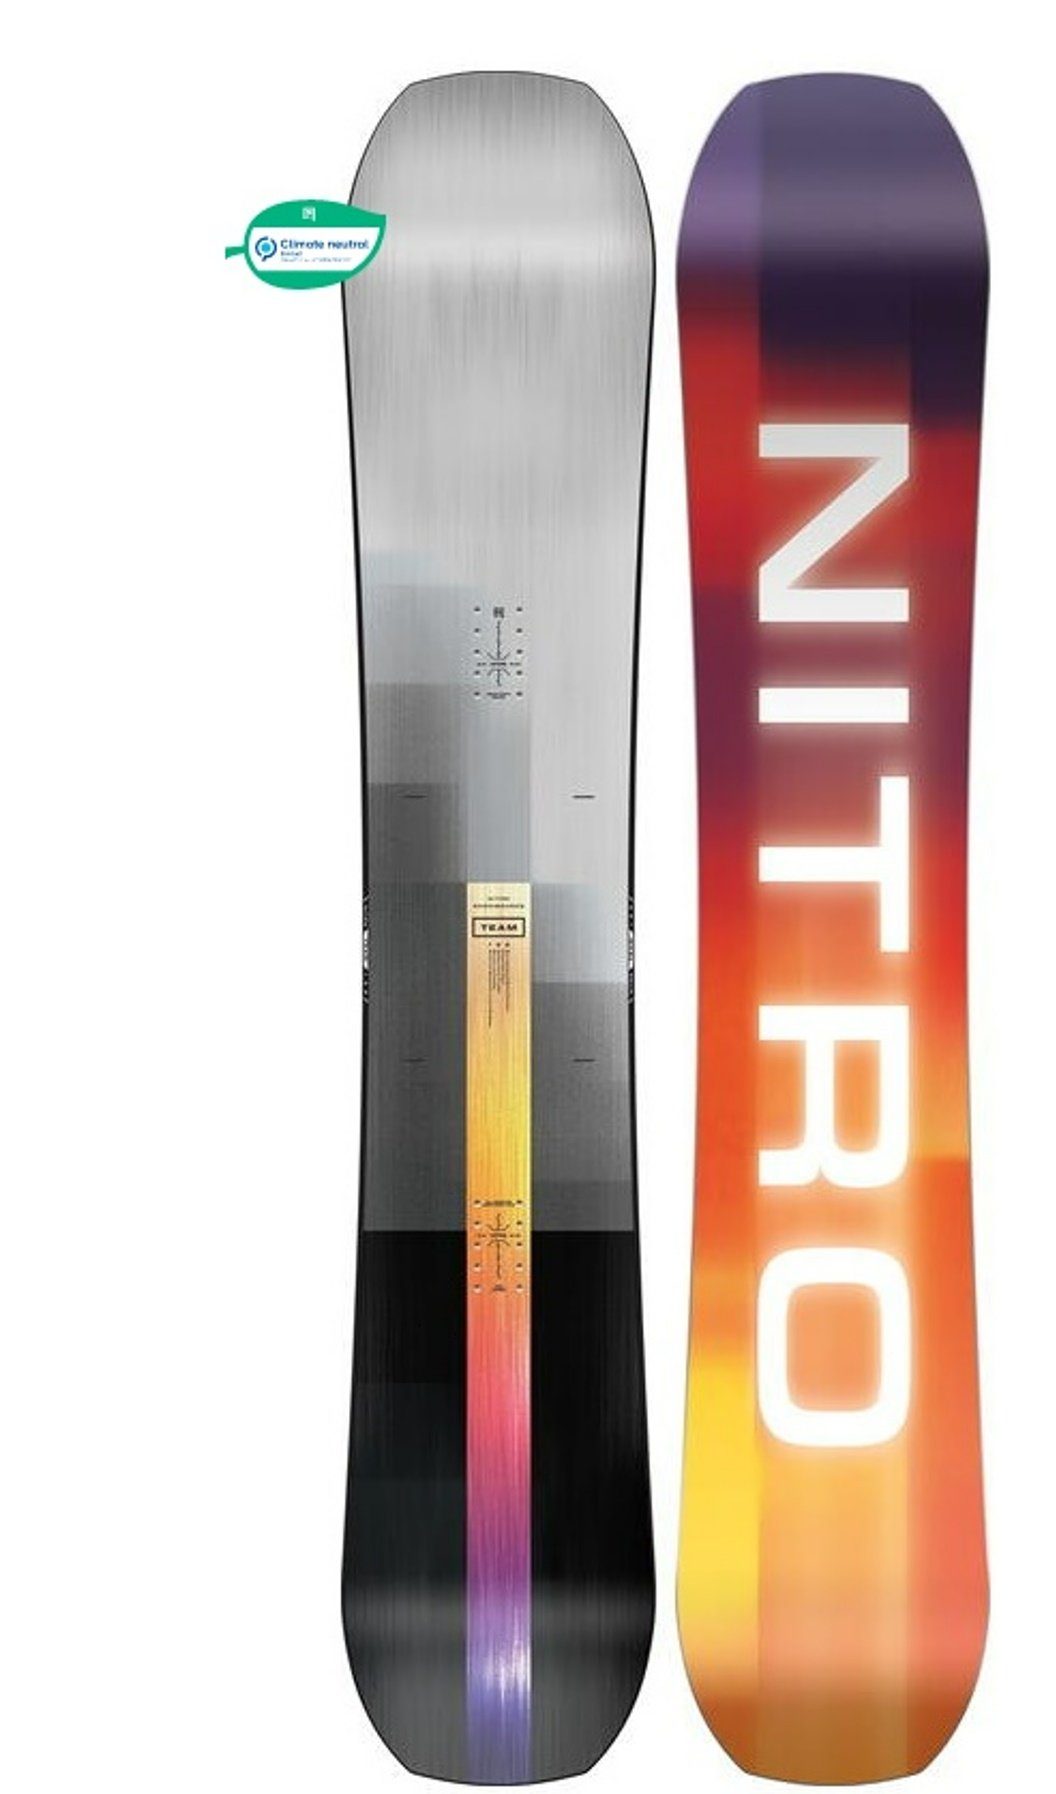 NITRO Snowboard